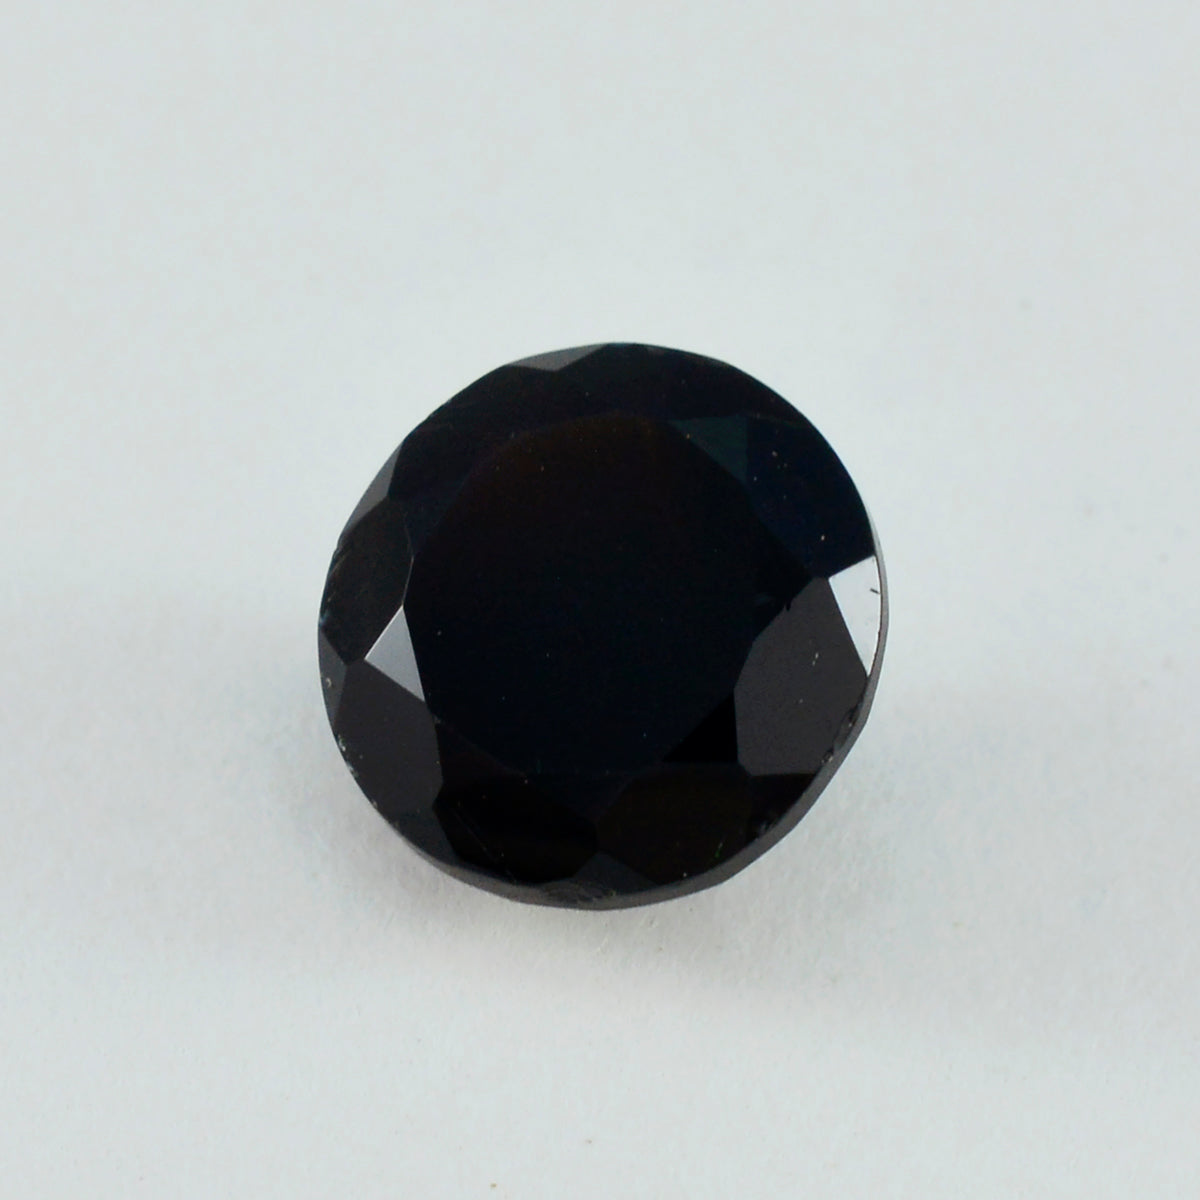 Riyogems 1PC Real Black Onyx Faceted 14x14 mm Round Shape handsome Quality Gems